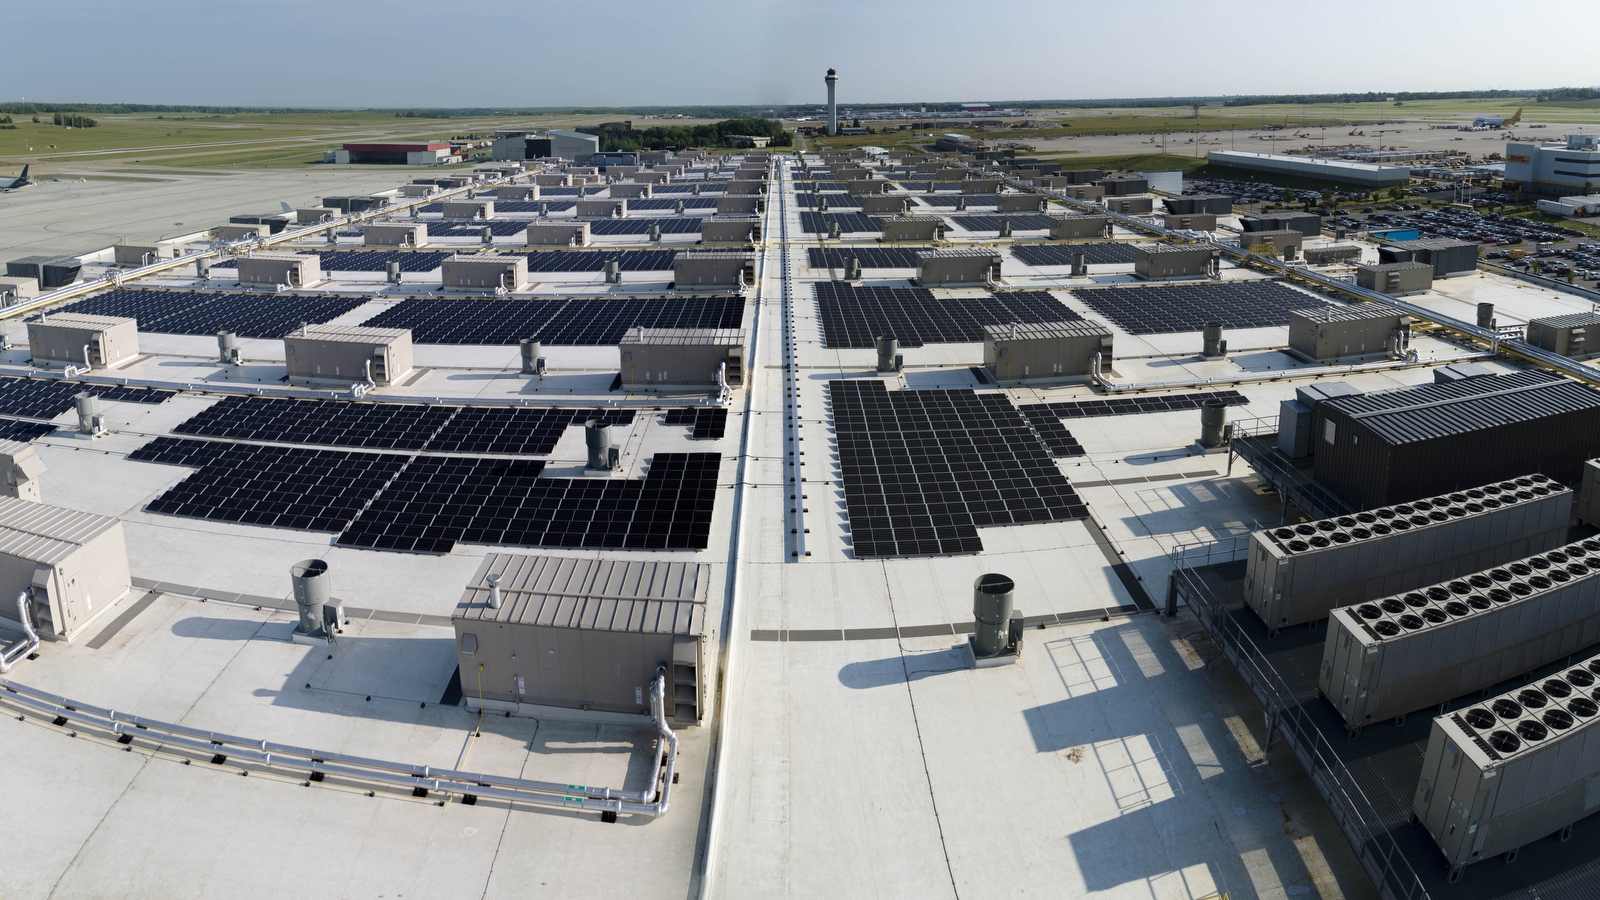 Drone image of solar farm.